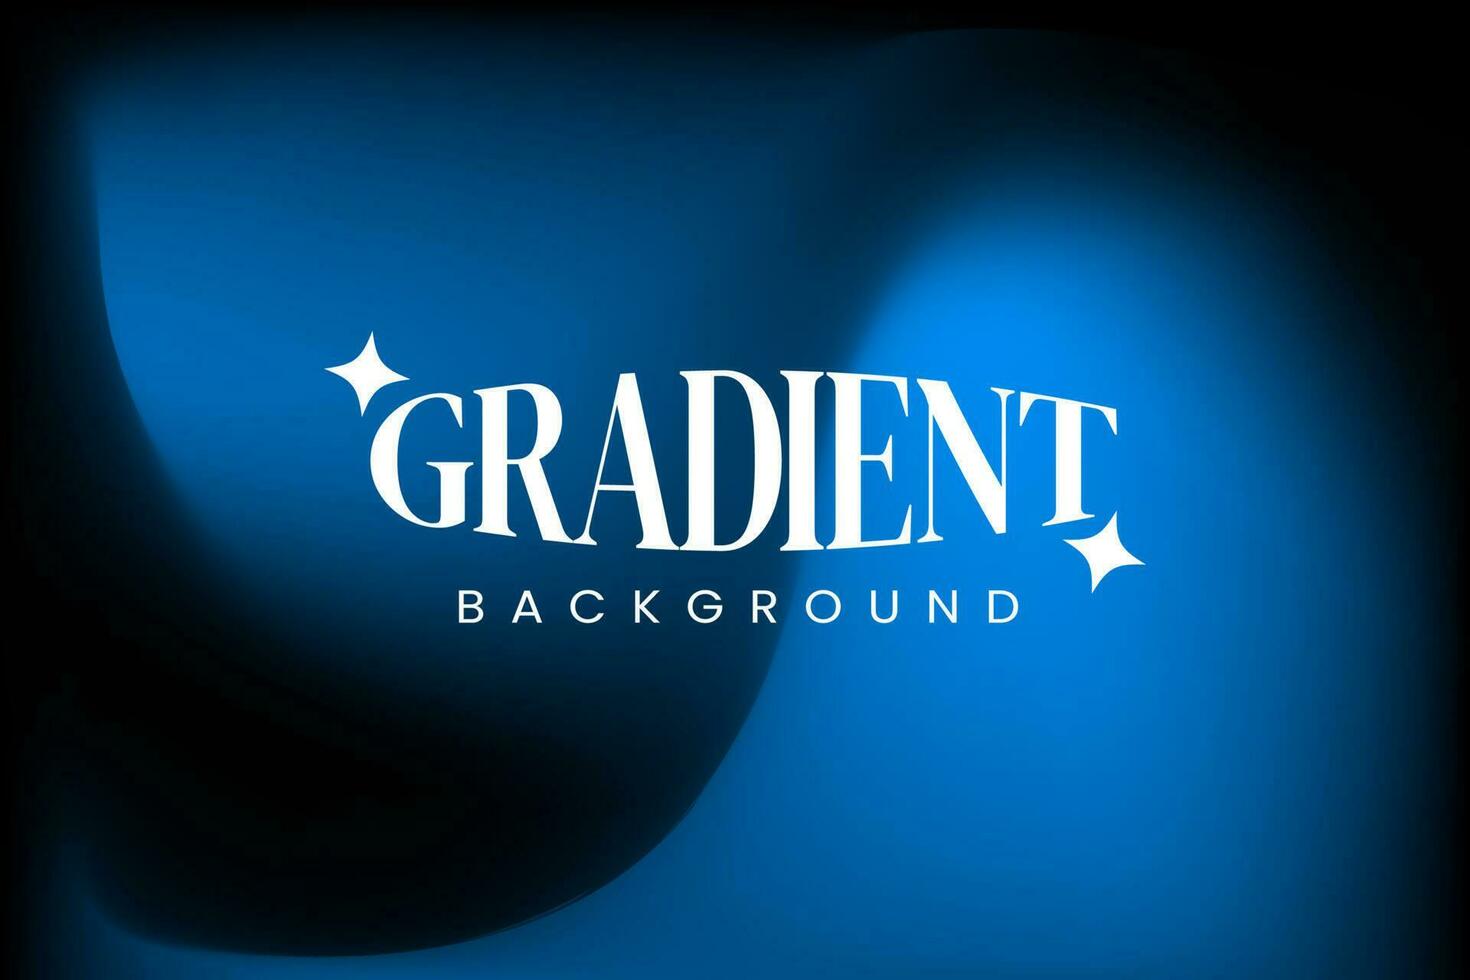 Grainy Gradient Background vector